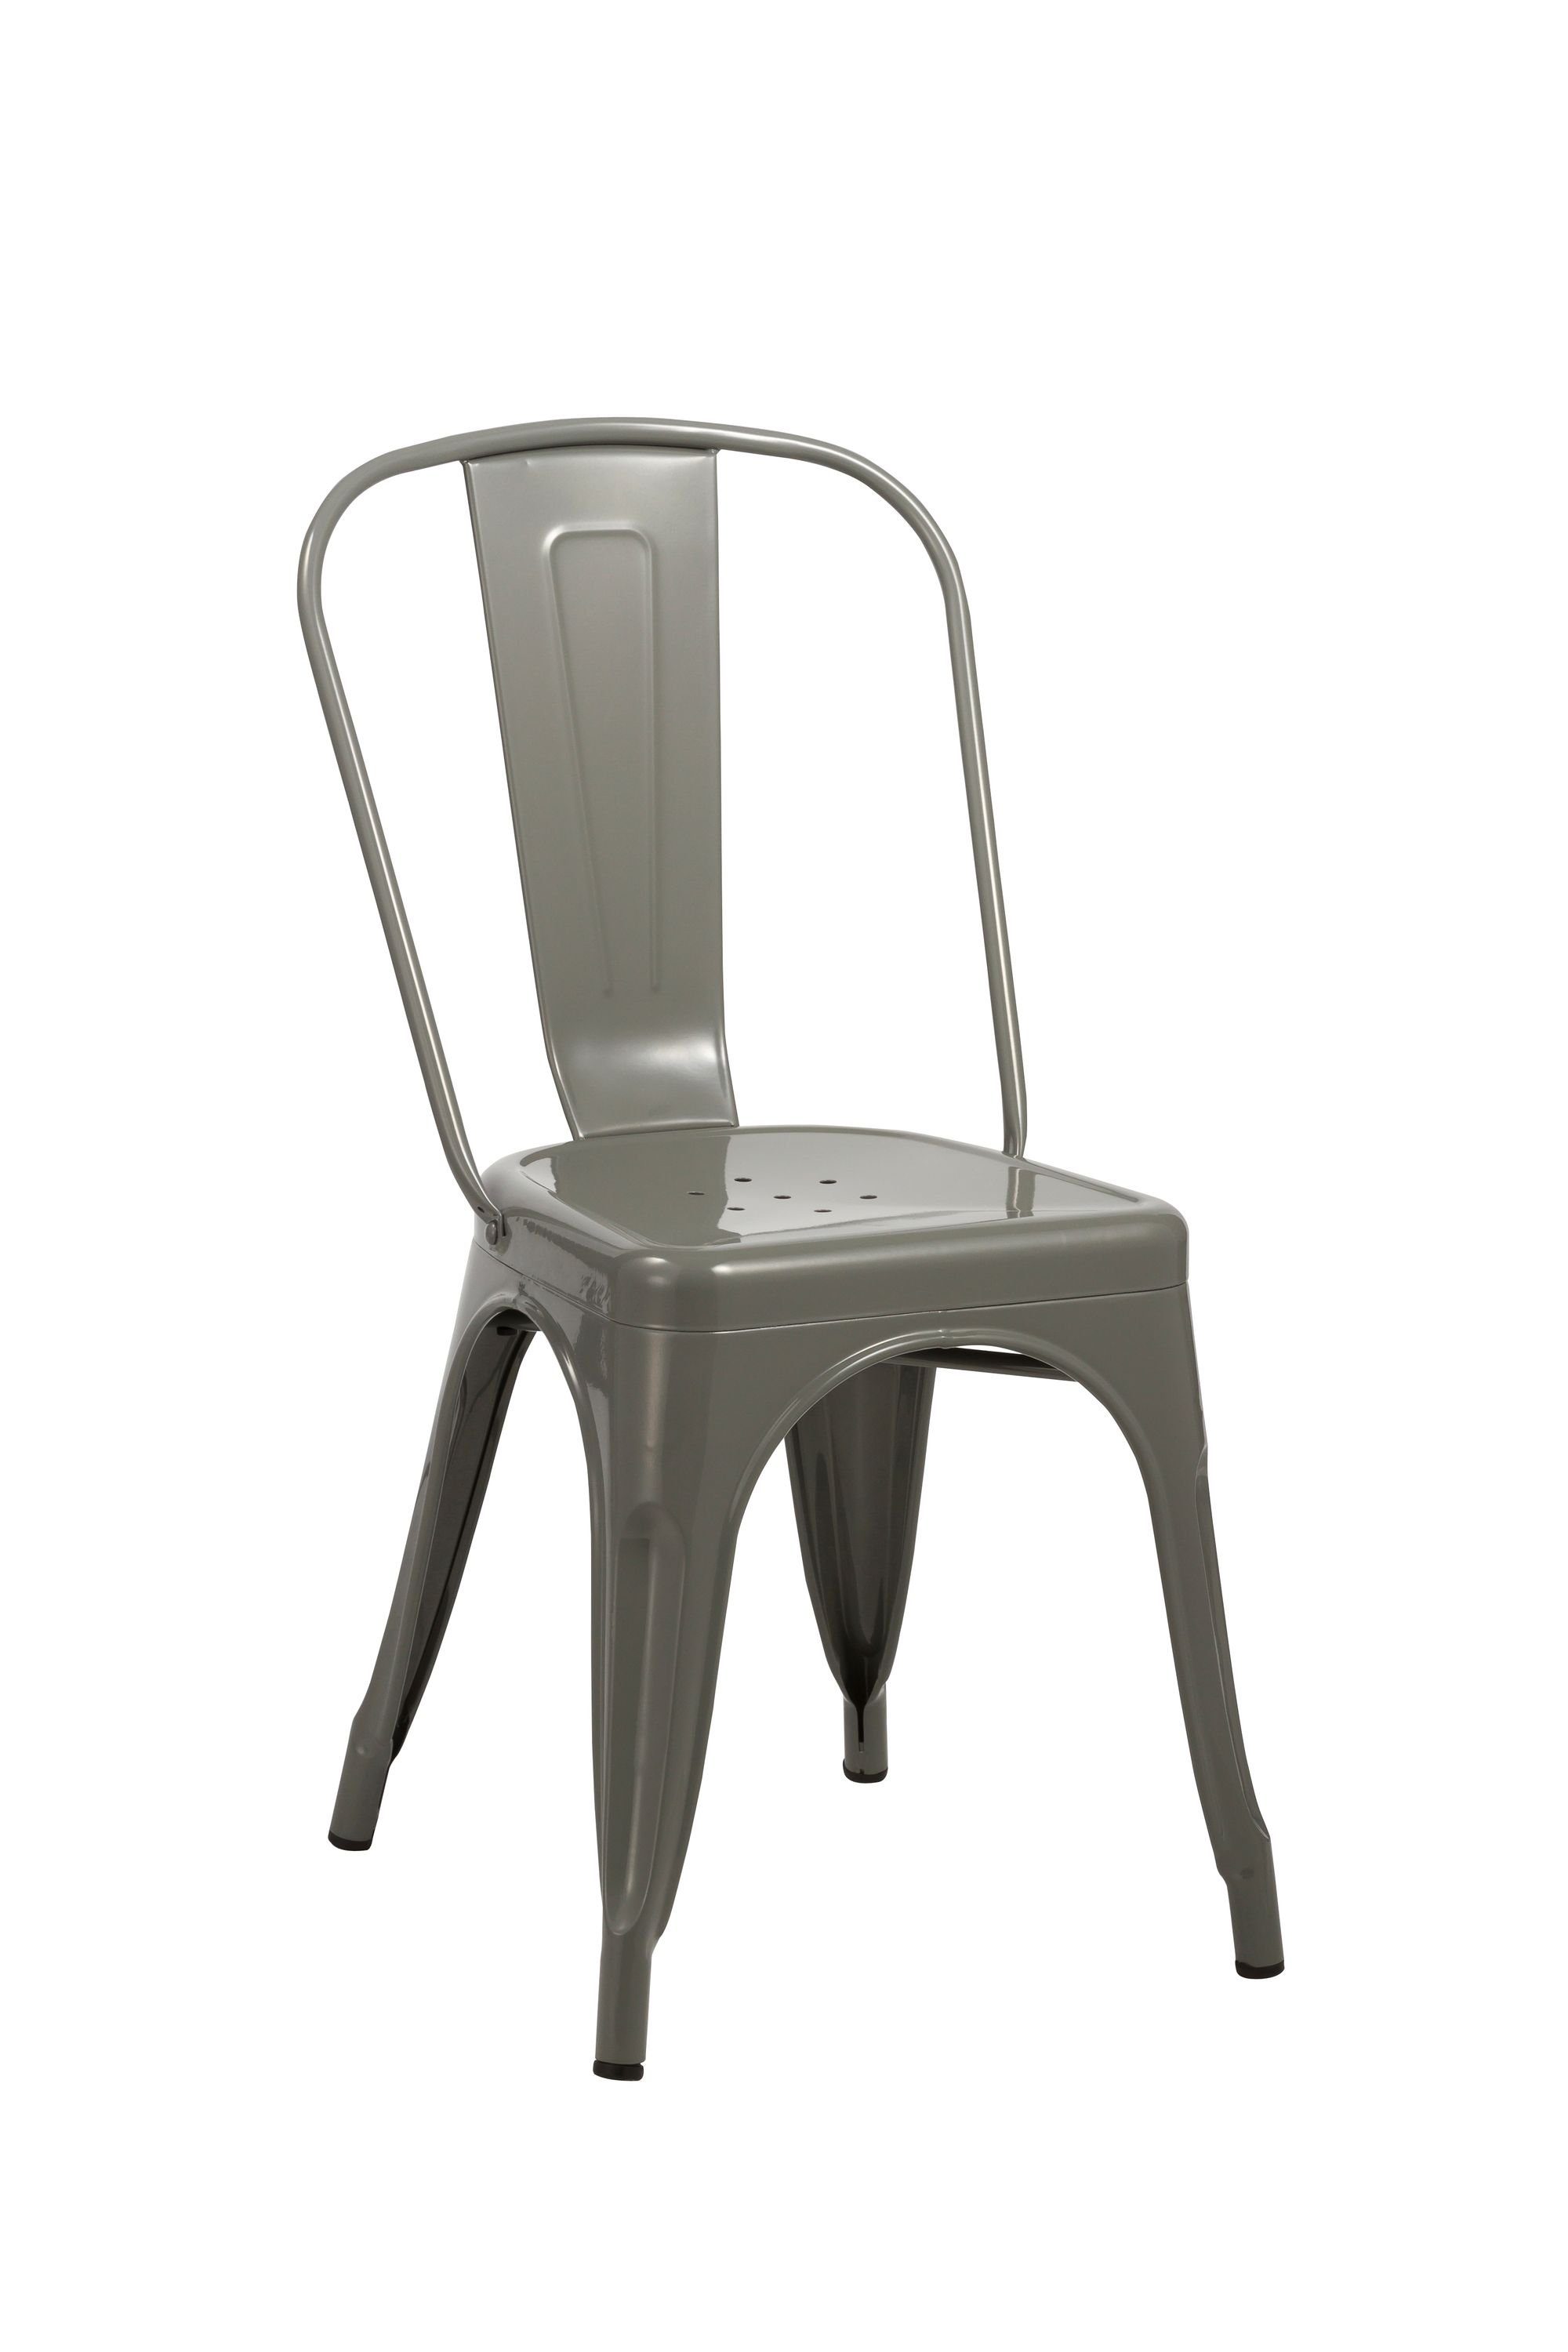 Esszimmerstuhl, aus Duhome Esszimmerstuhl Grau Sitzfläche Stuhl METALL stapelbar Holz Küchenstuhl aus